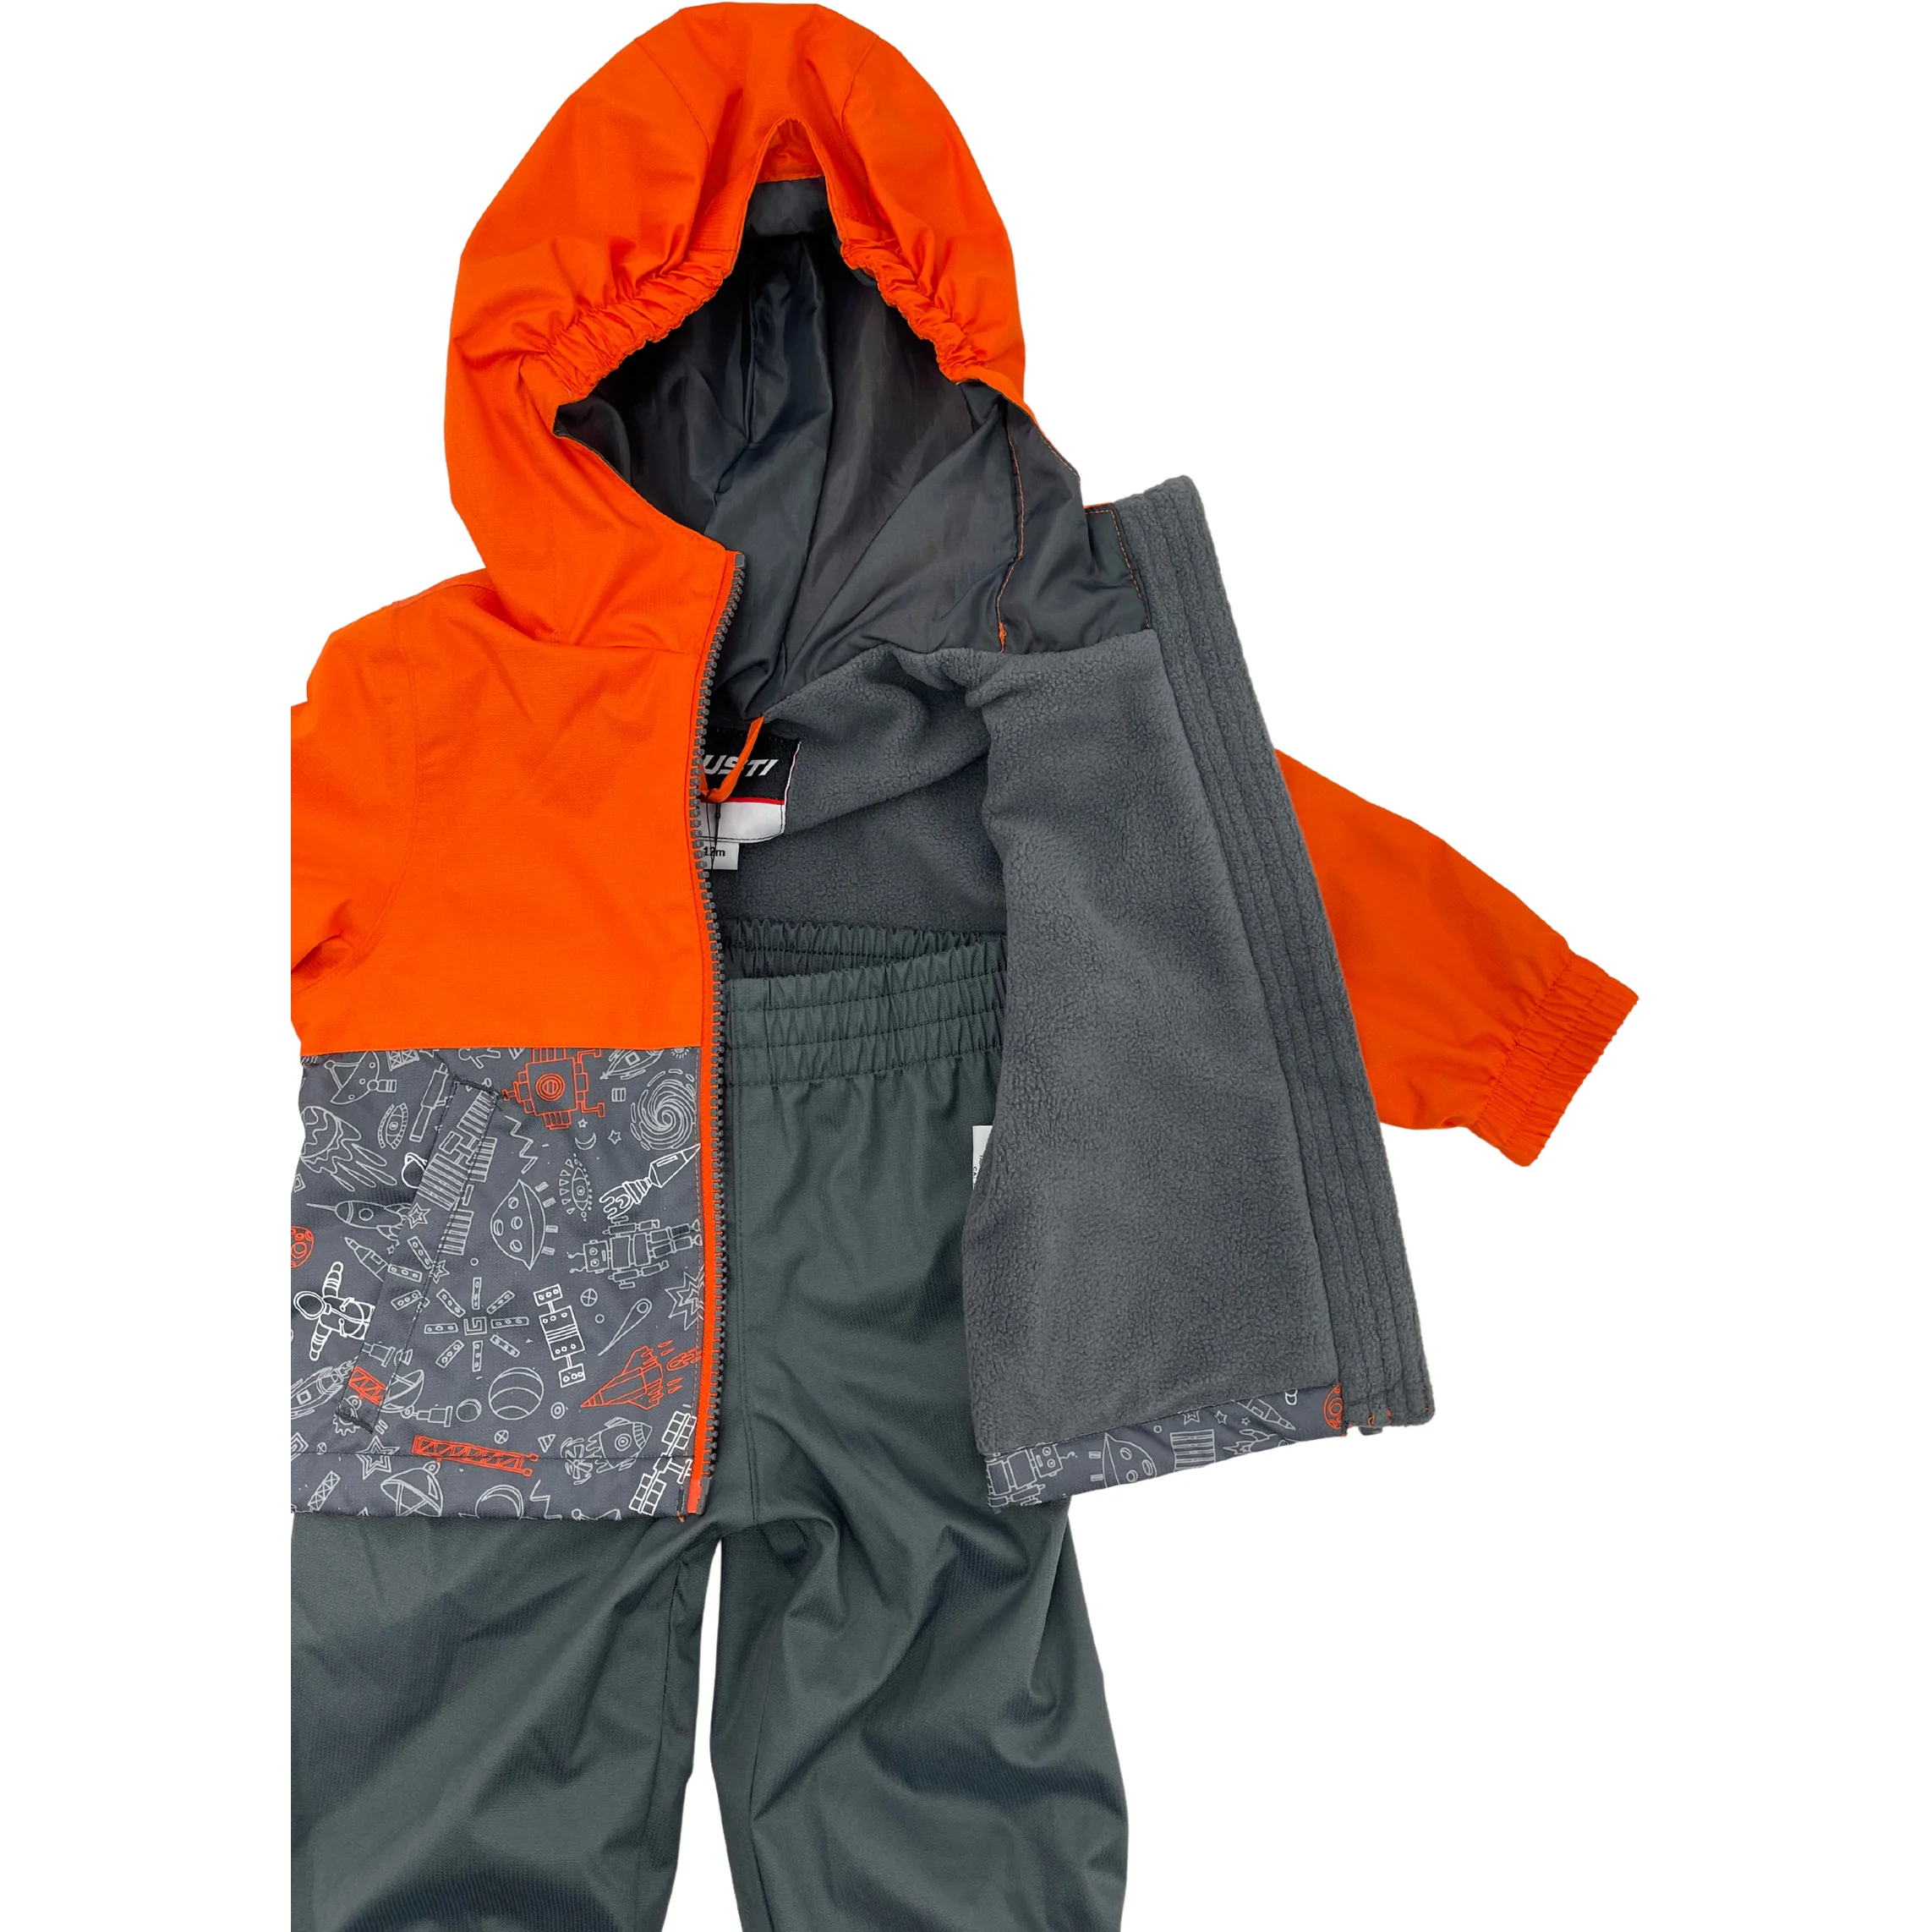 Gusti Toddler Boy's Spring Jacket with Pants / Orange & Grey / Size 12months